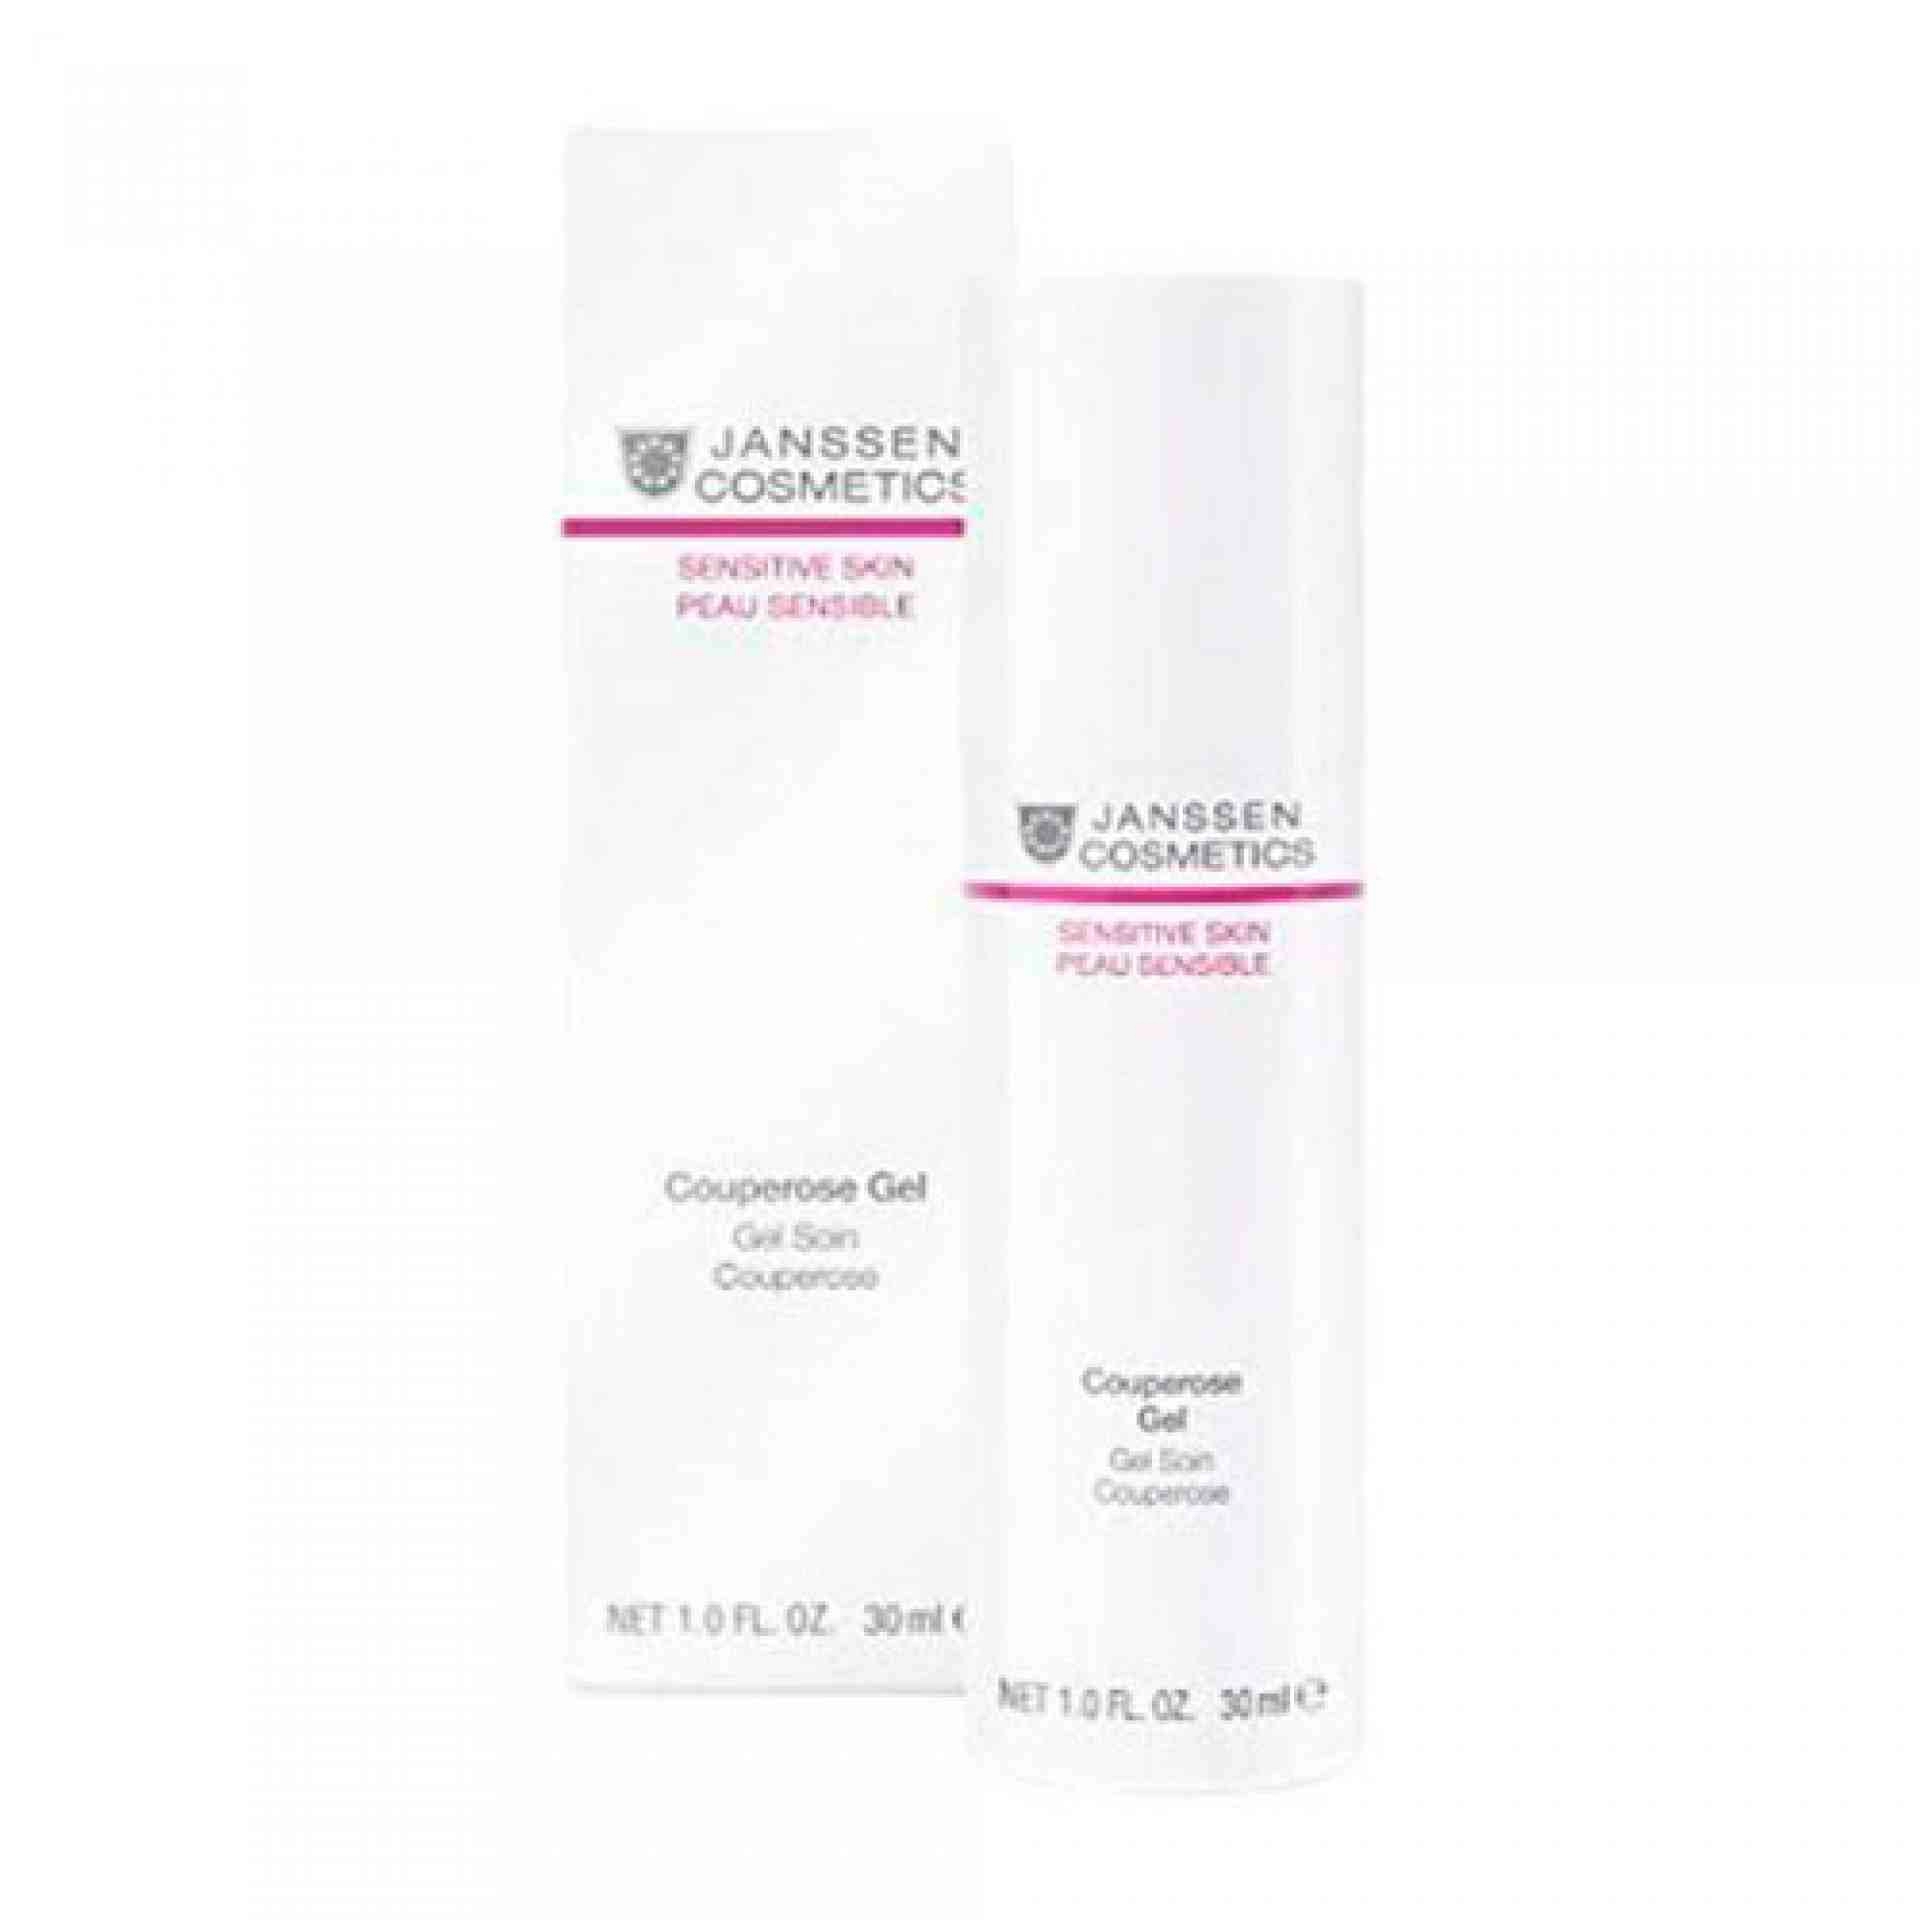 Sensitive Skin Couperose Gel 30ml Janssen Cosmetics ®